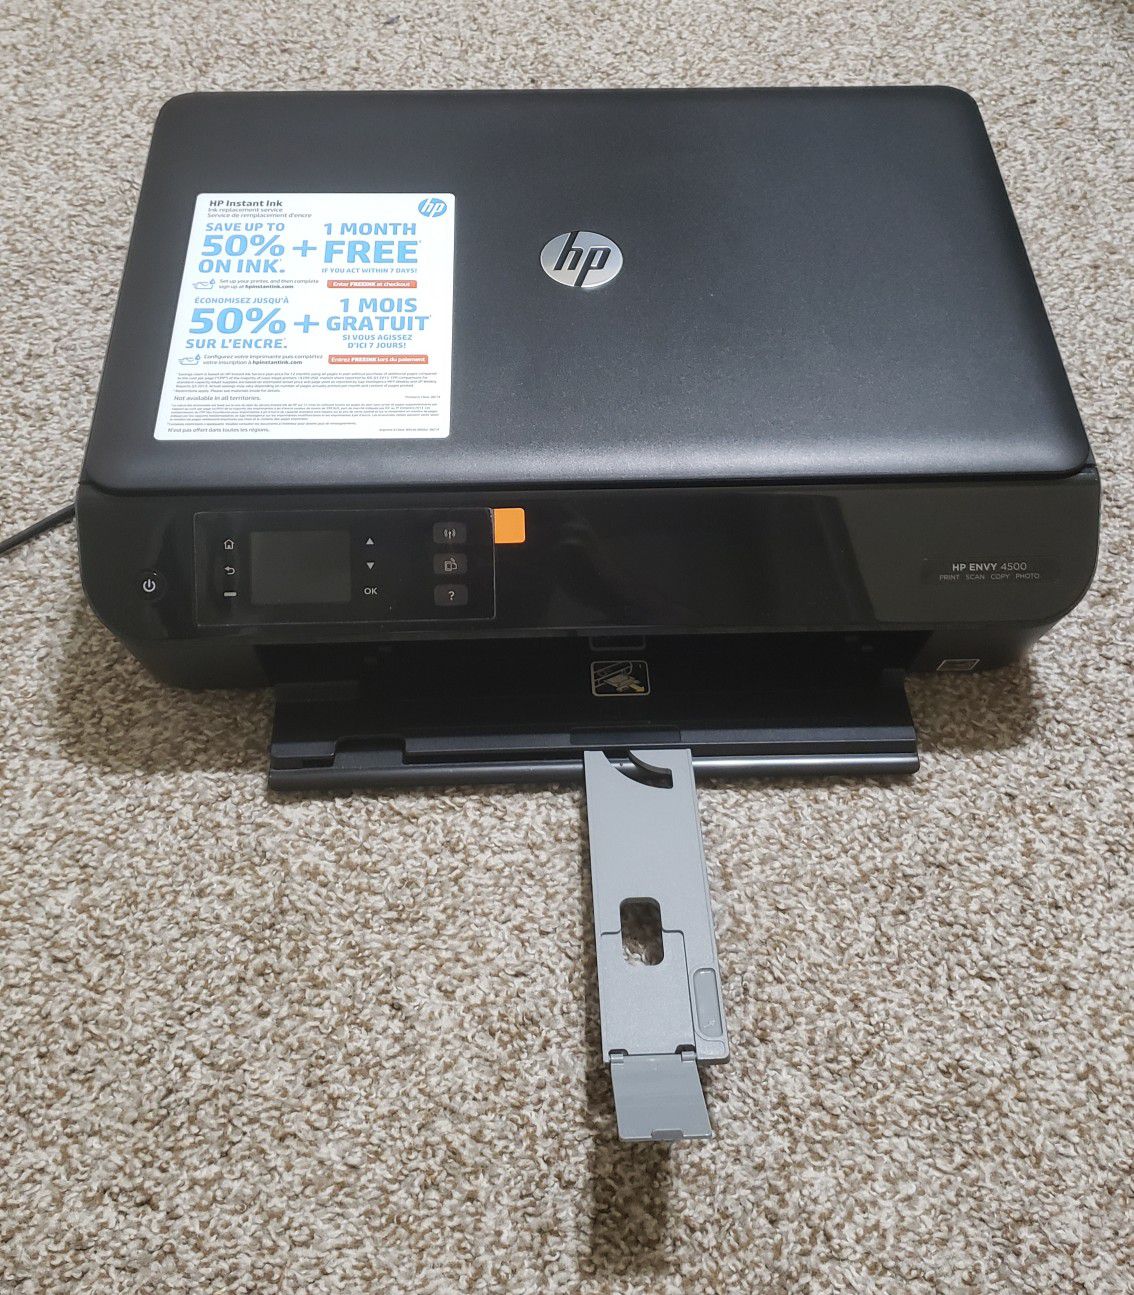 HP ENVY 4500 e-All-in-One Printer